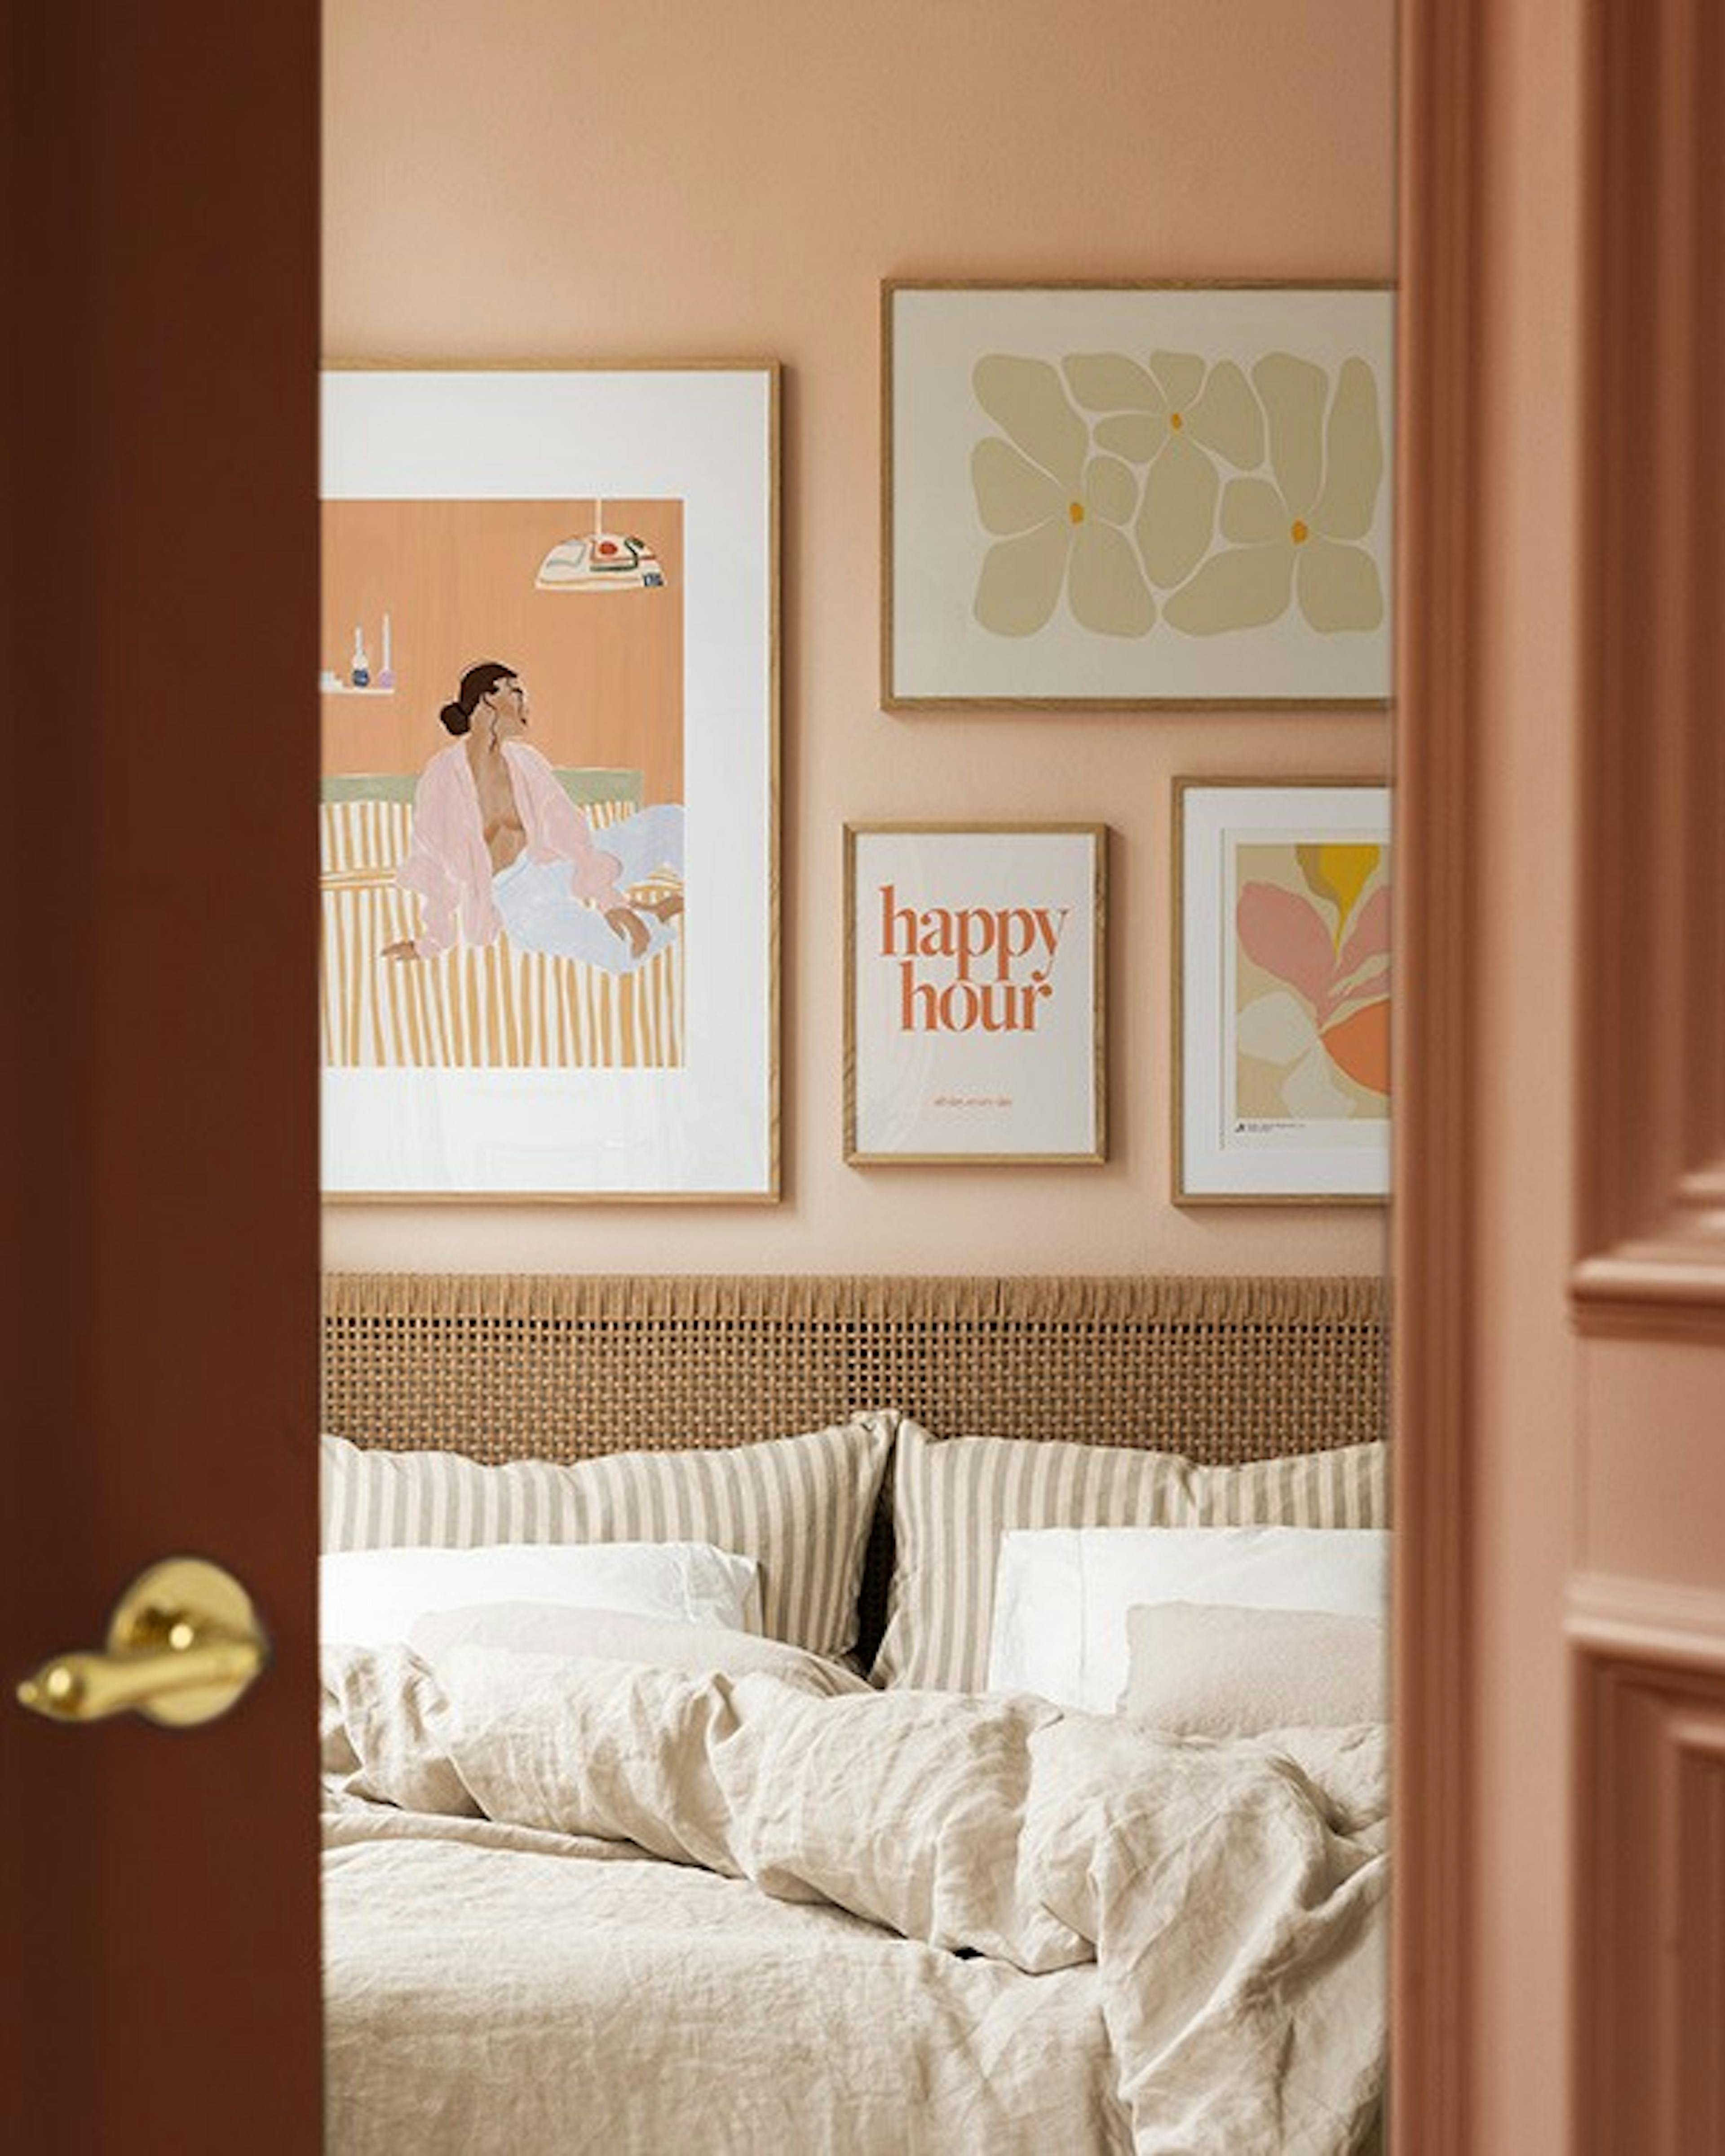 Peachy bedroom galleria a parete